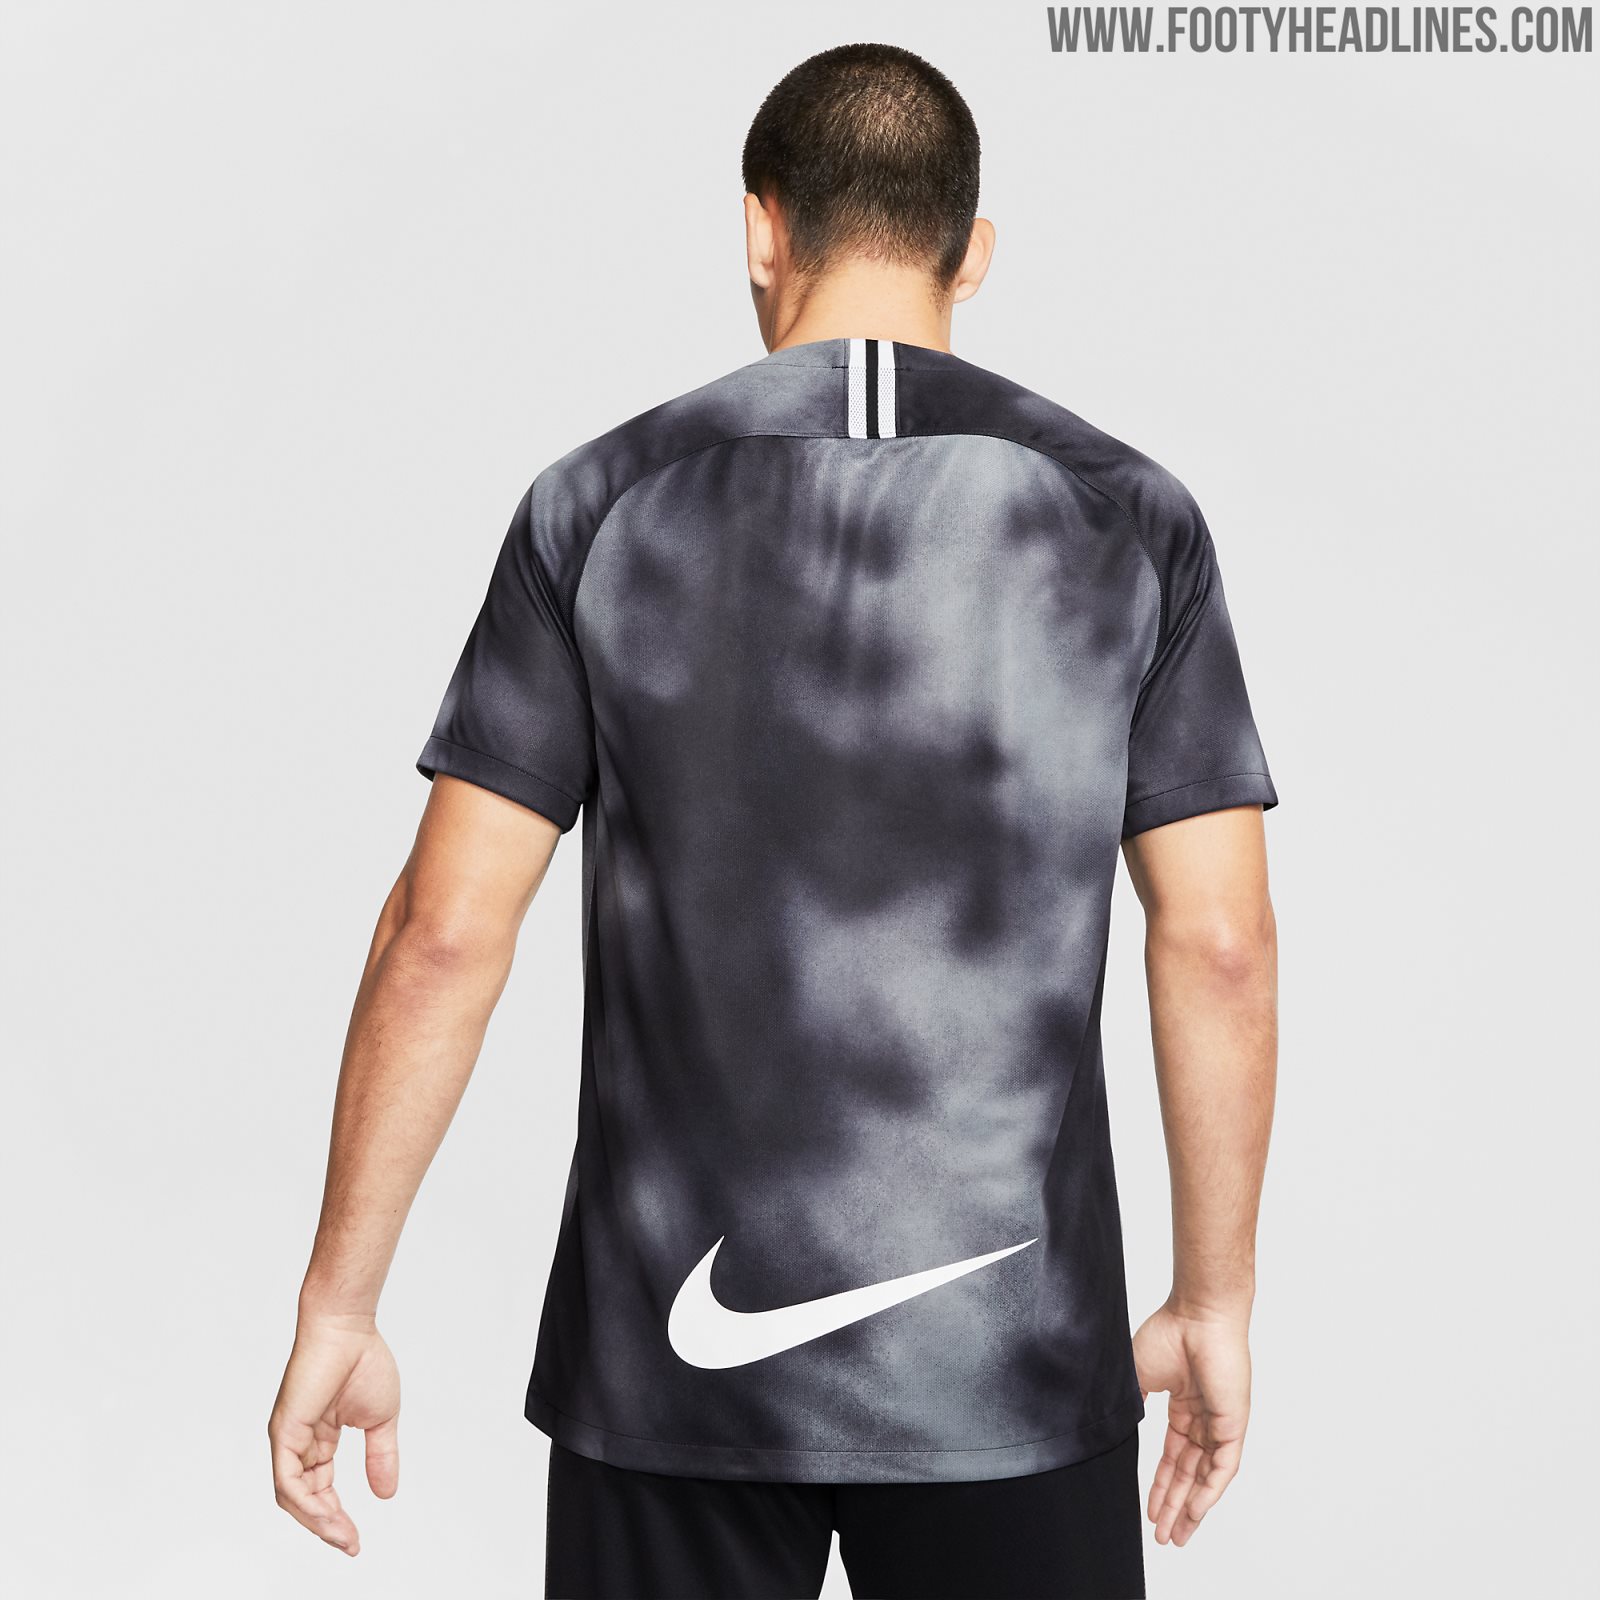 'Street Heat': Nike FC Summer 2019 Collection Released - Footy Headlines